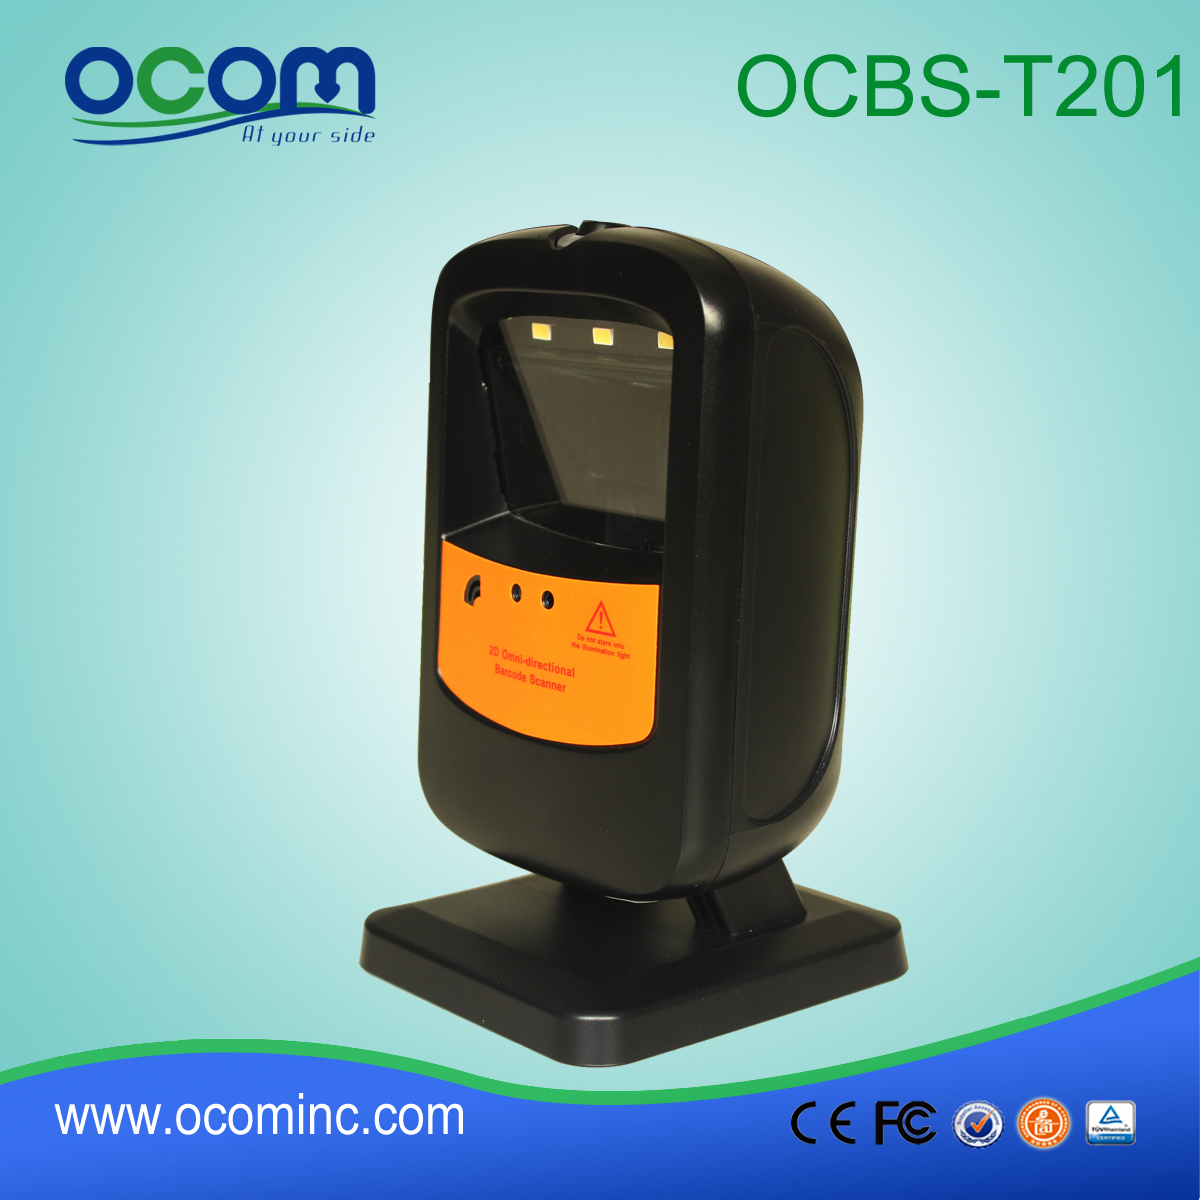 OCBs-T201 Ορατό 2D Σαρωτής Barcode USB για Ταμειακή